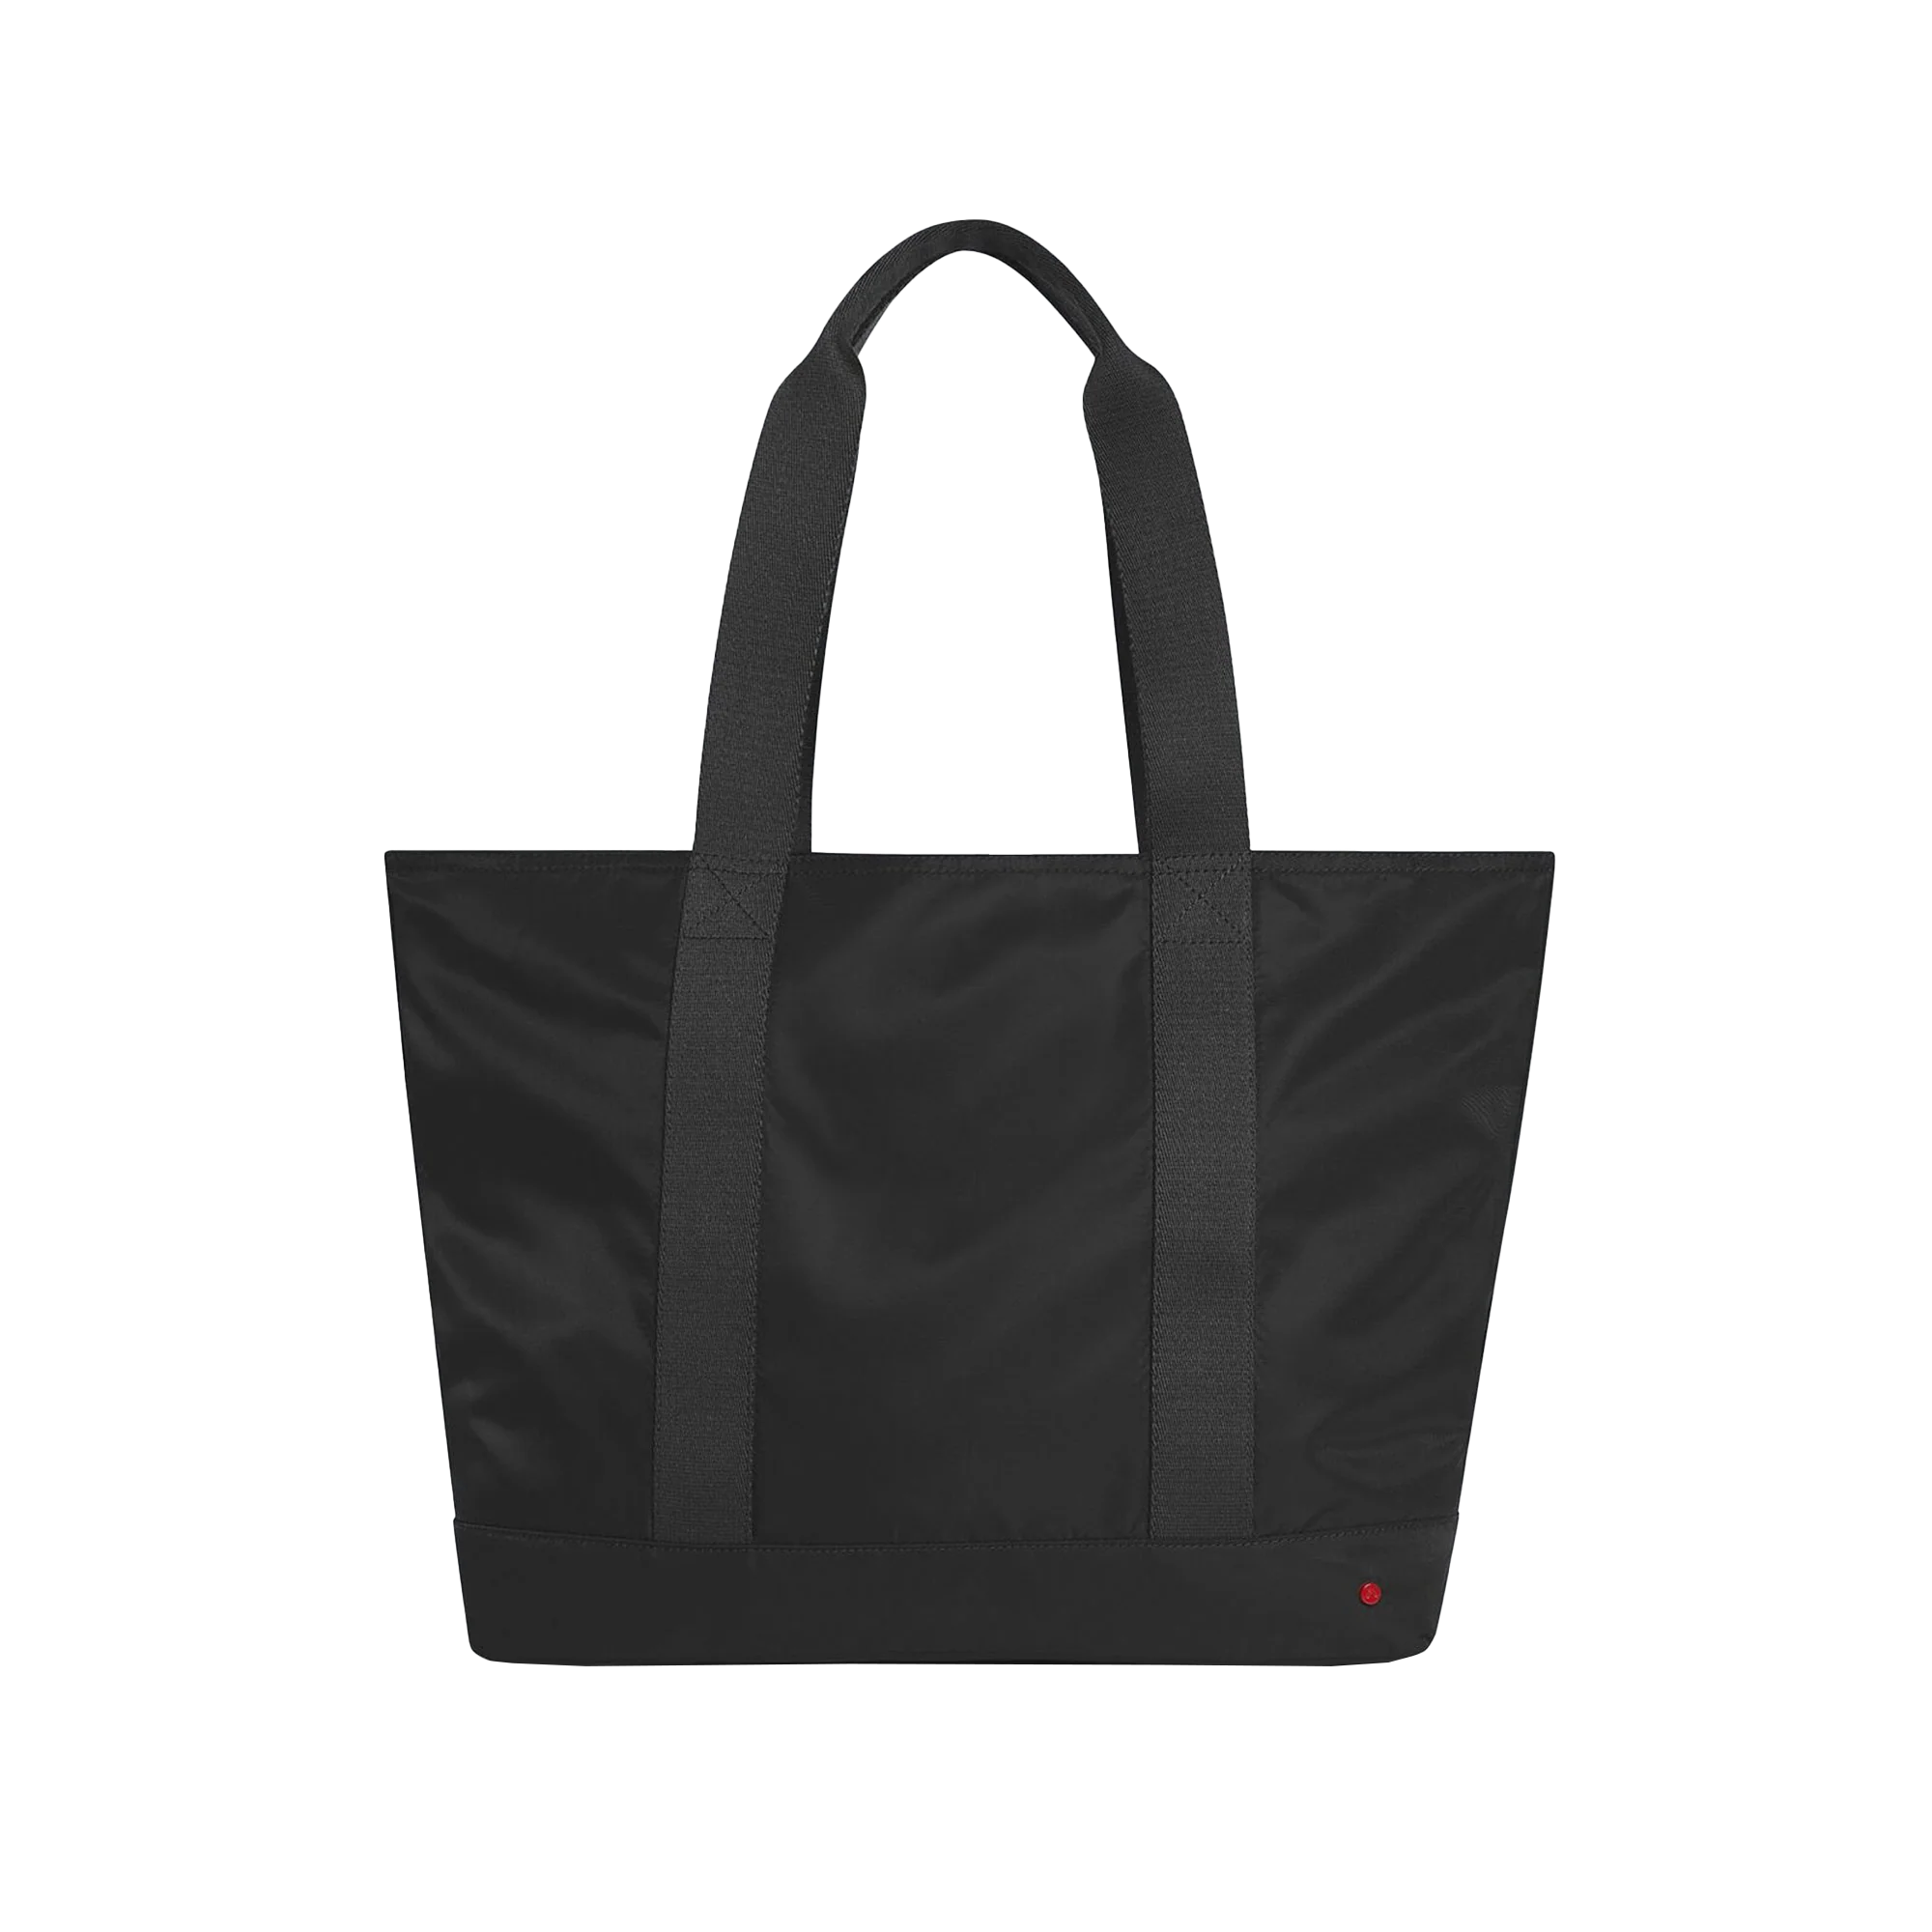 STATE Bags Nylon Tote - Graham in Black